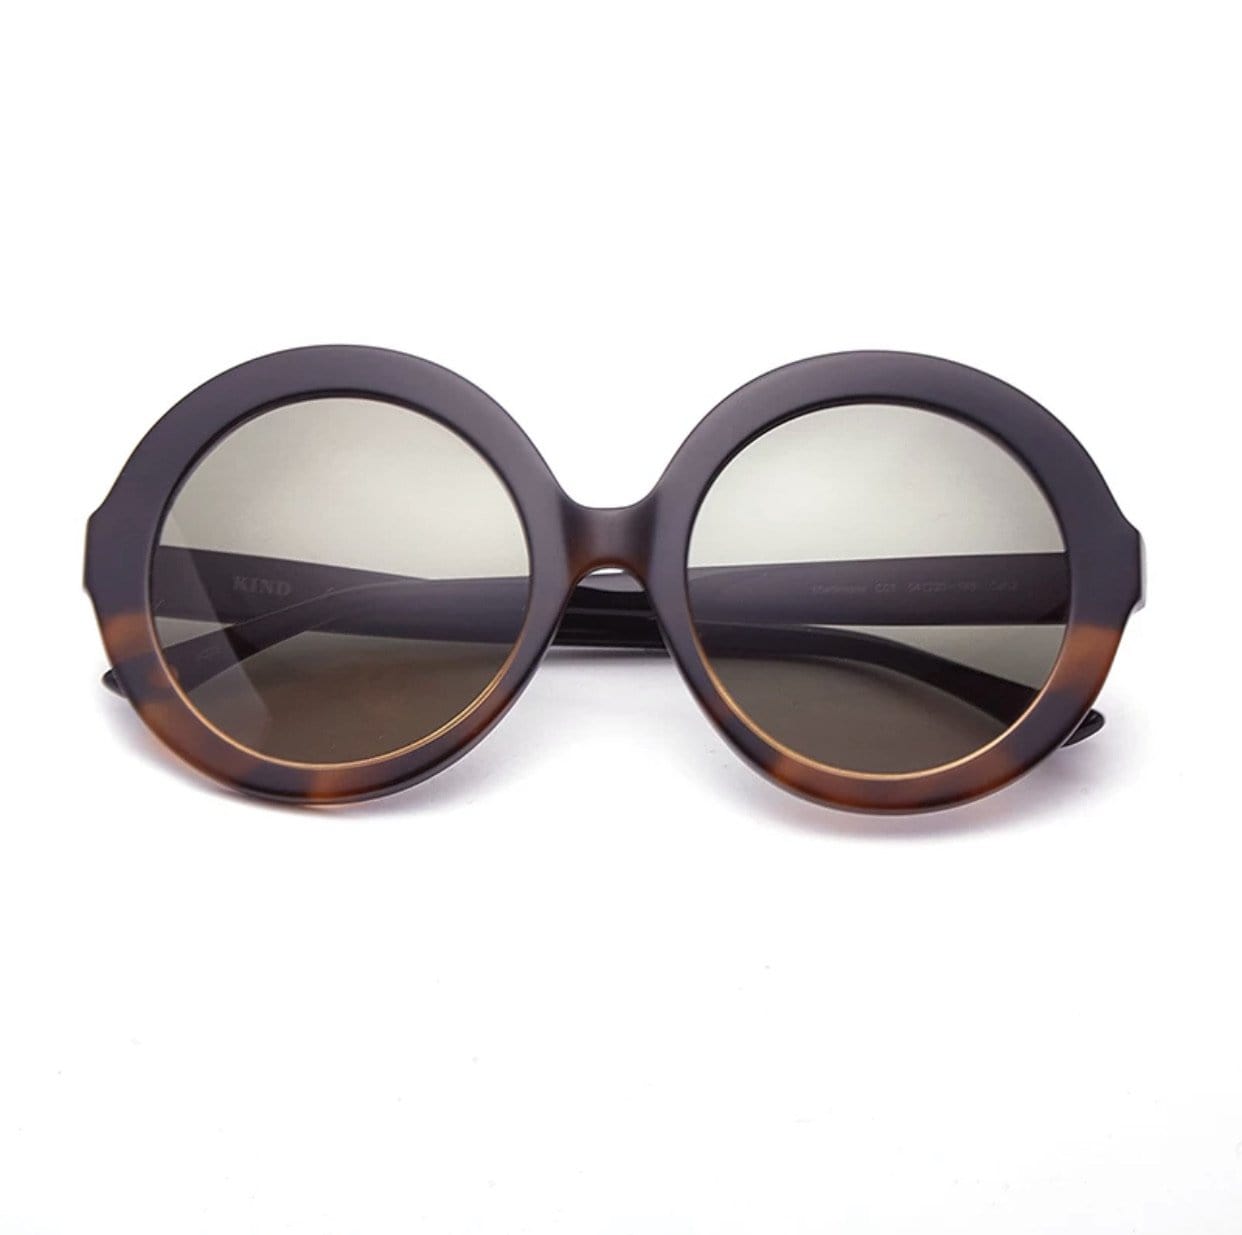 Dejavu Style Brown Sunglasses at Born In The Sun - Borninthesun